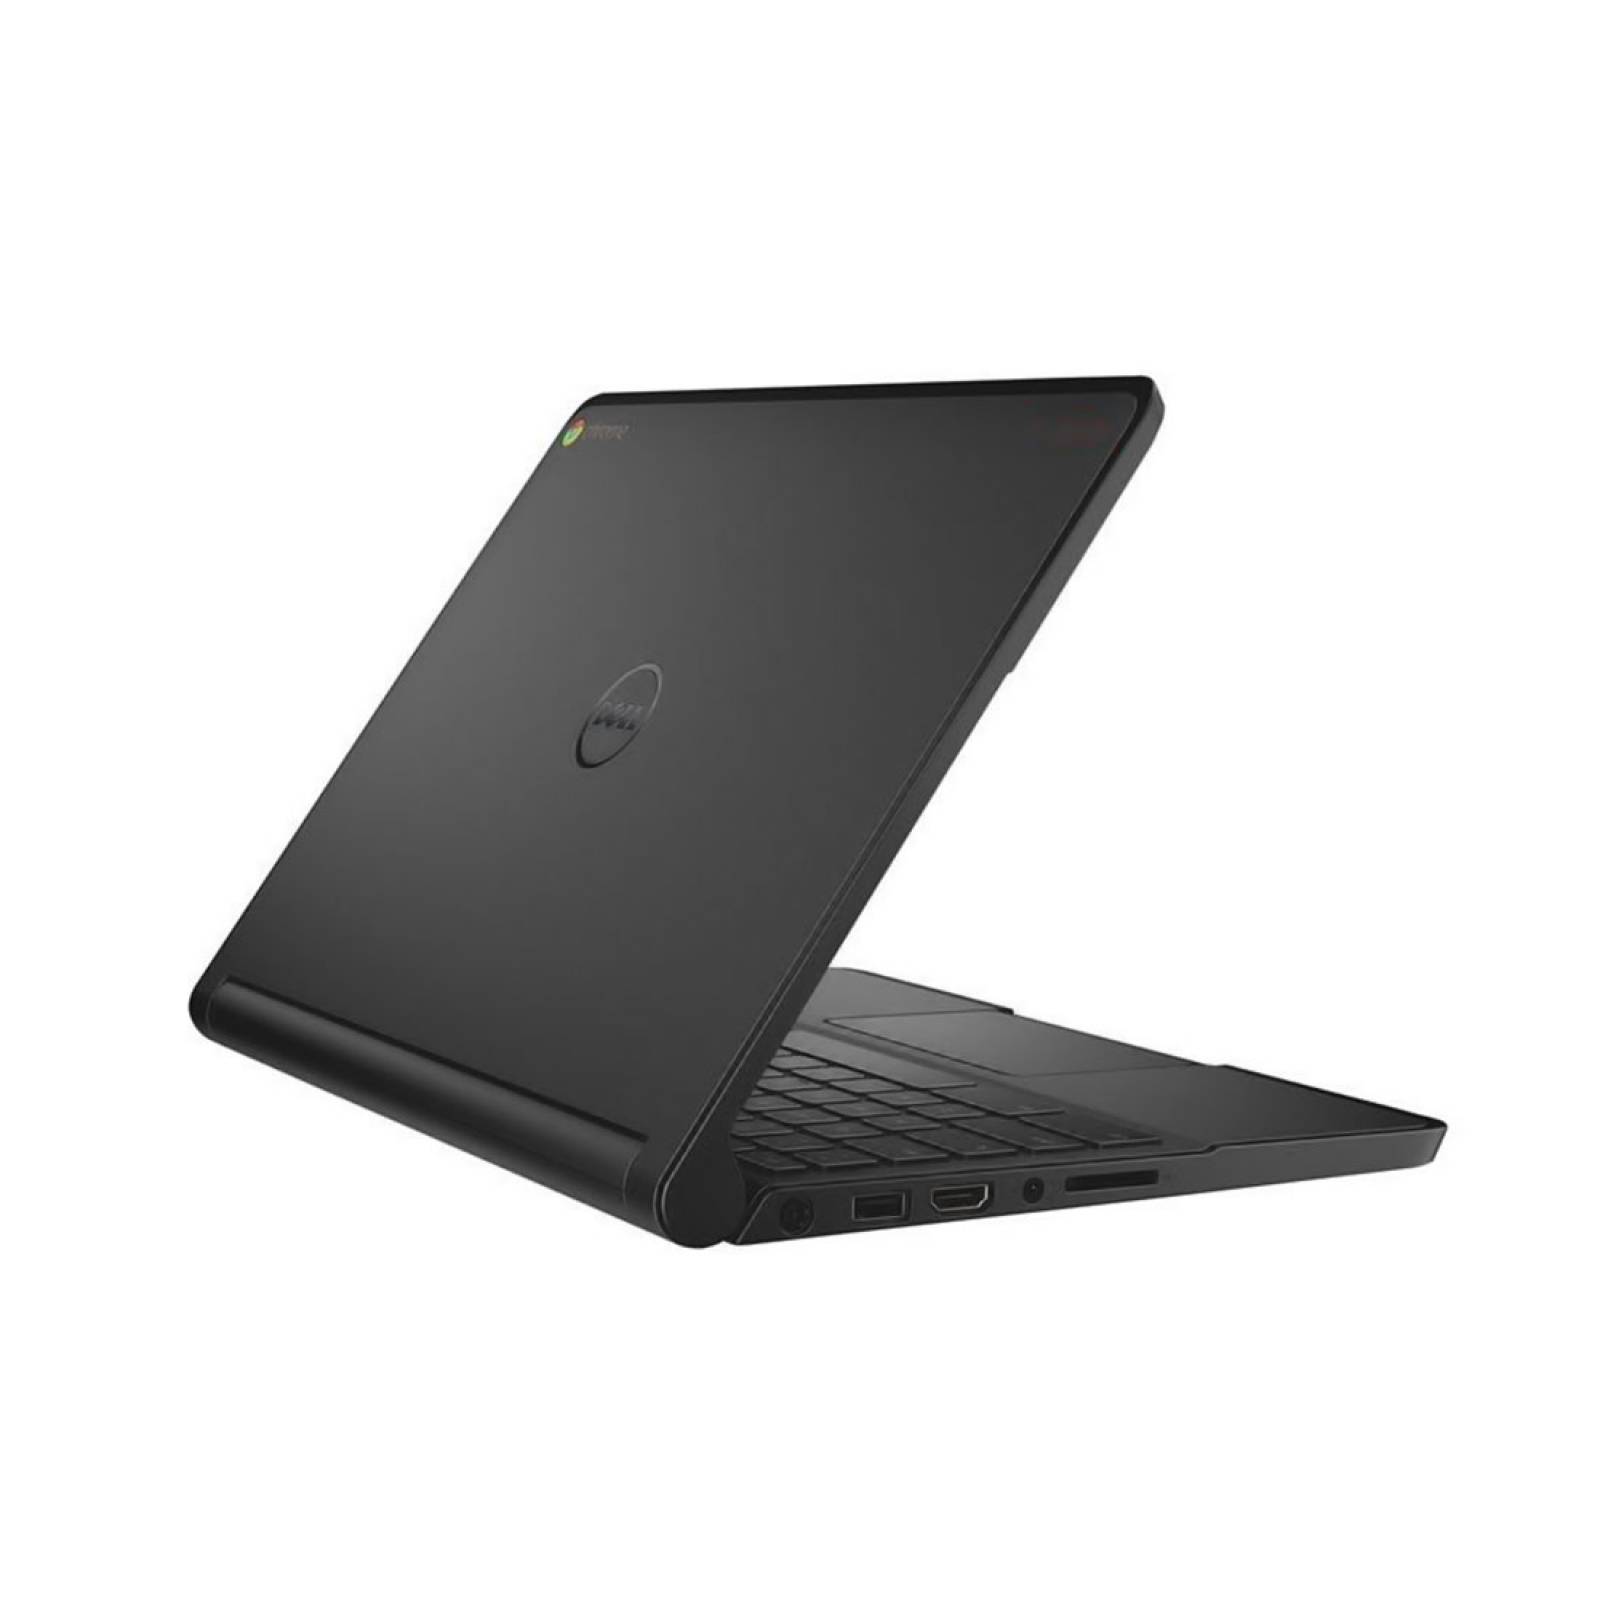 Dell Chromebook Black 2.16GHz, Dual Core, Reacondicionado